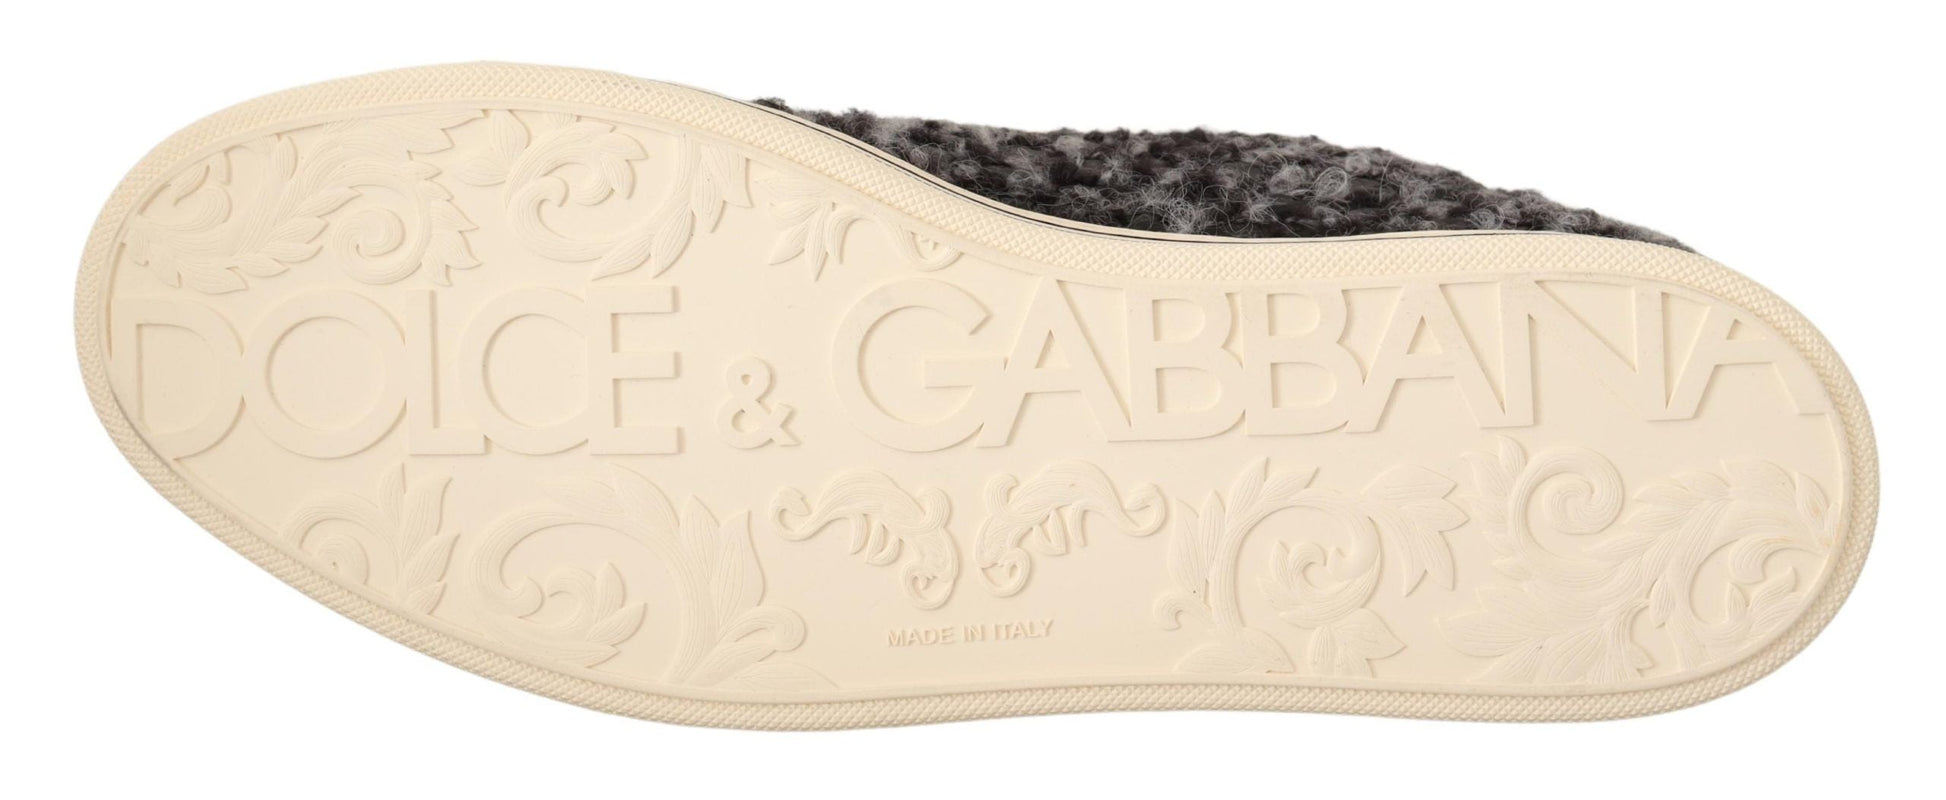 Dolce & Gabbana Gray Black Wool Cotton High Top Sneakers | Fashionsarah.com